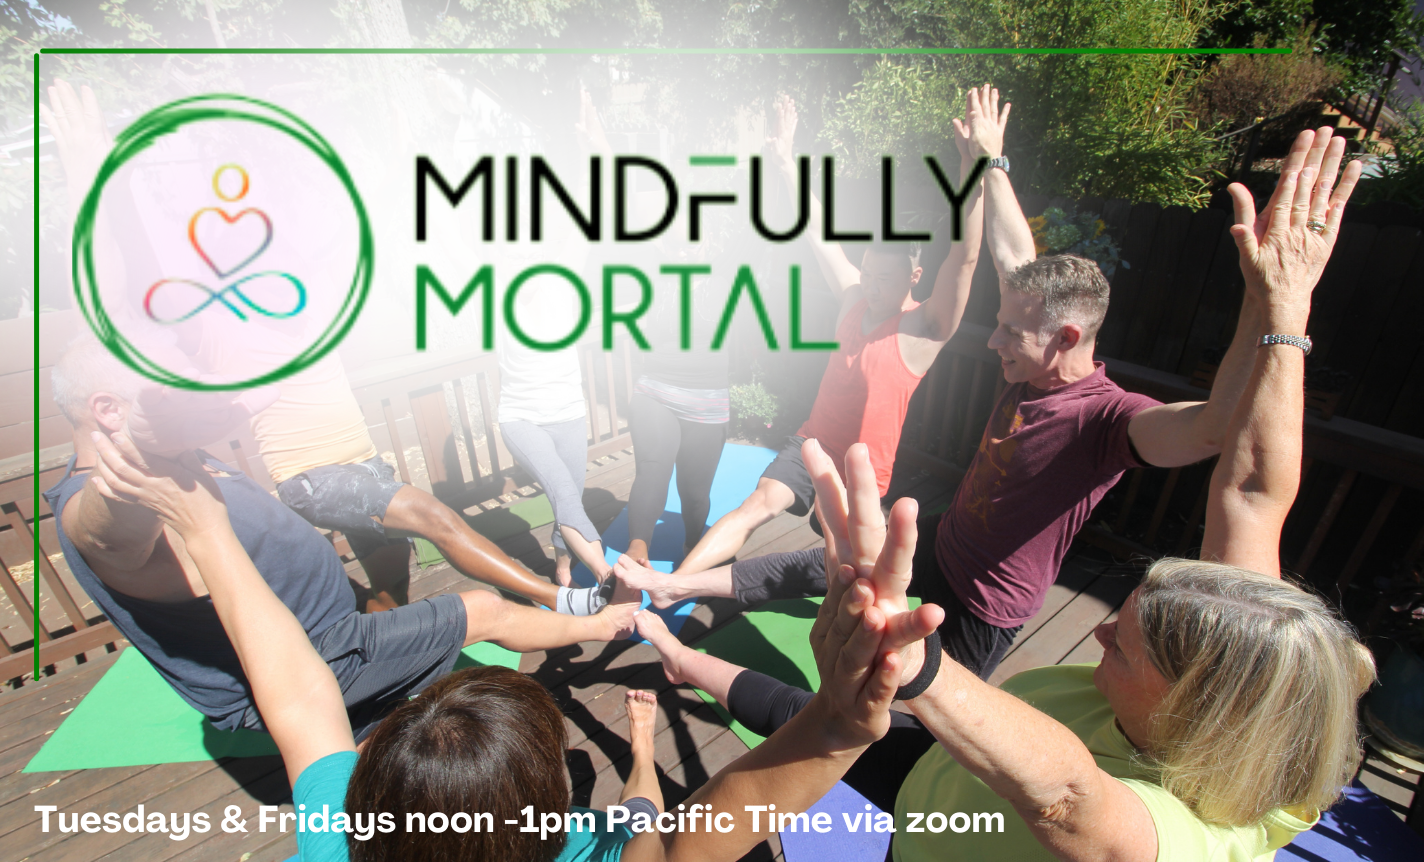 Mindfully Mortal Tuesdays: calm+unity yoga w/ Ken Breniman